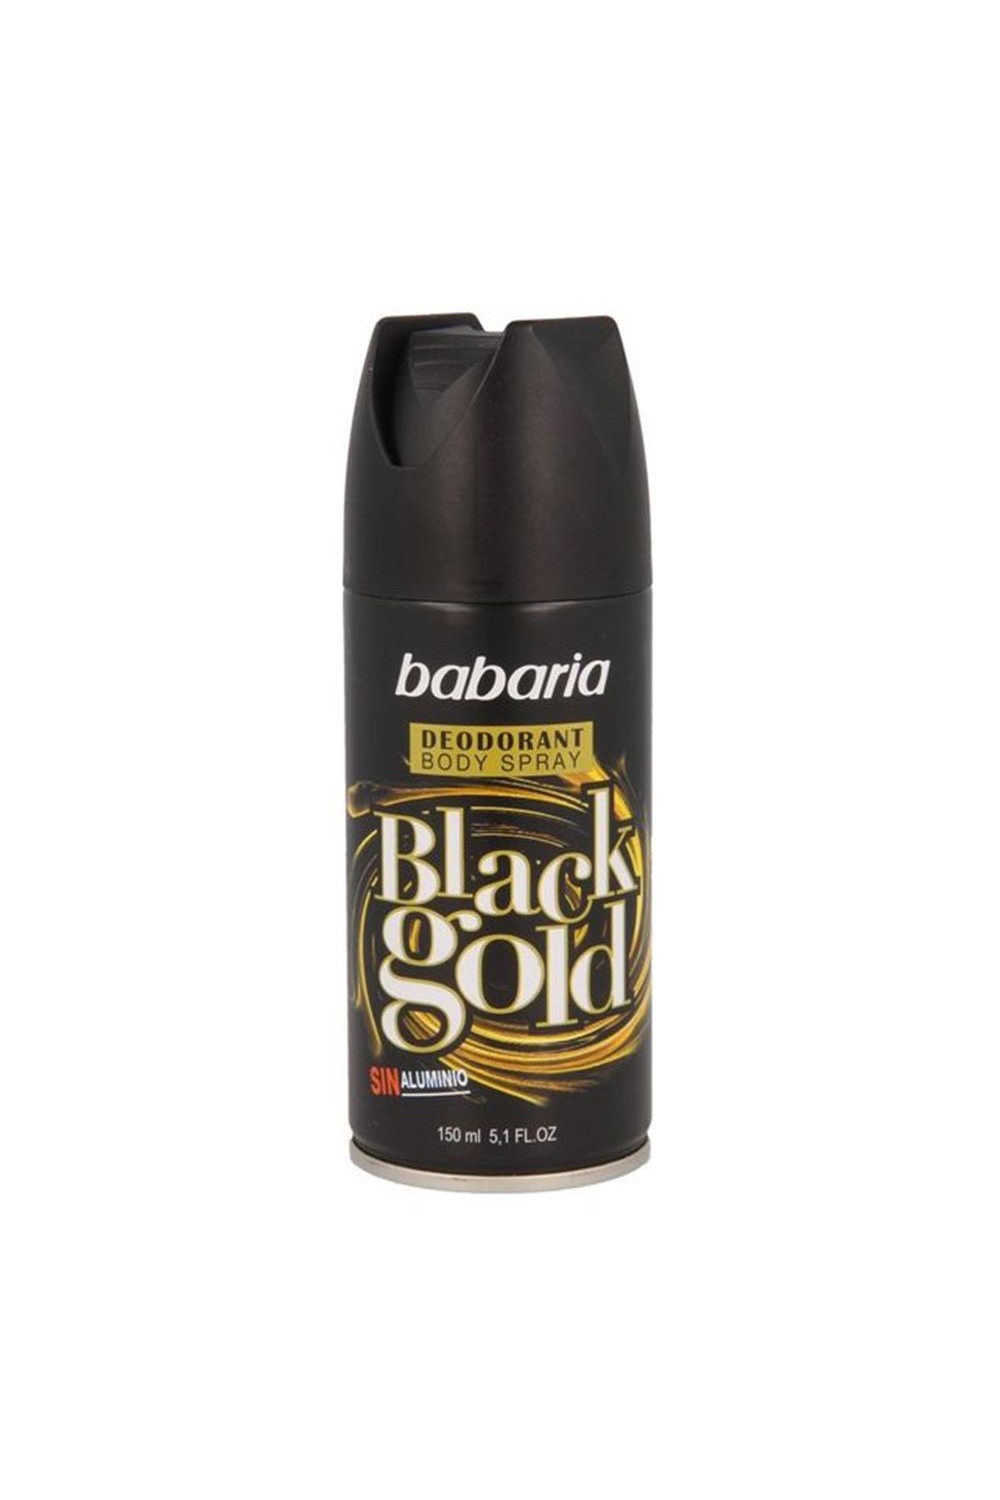 Babaria Black Gold Deodorant Spray 150ml+50ml Free